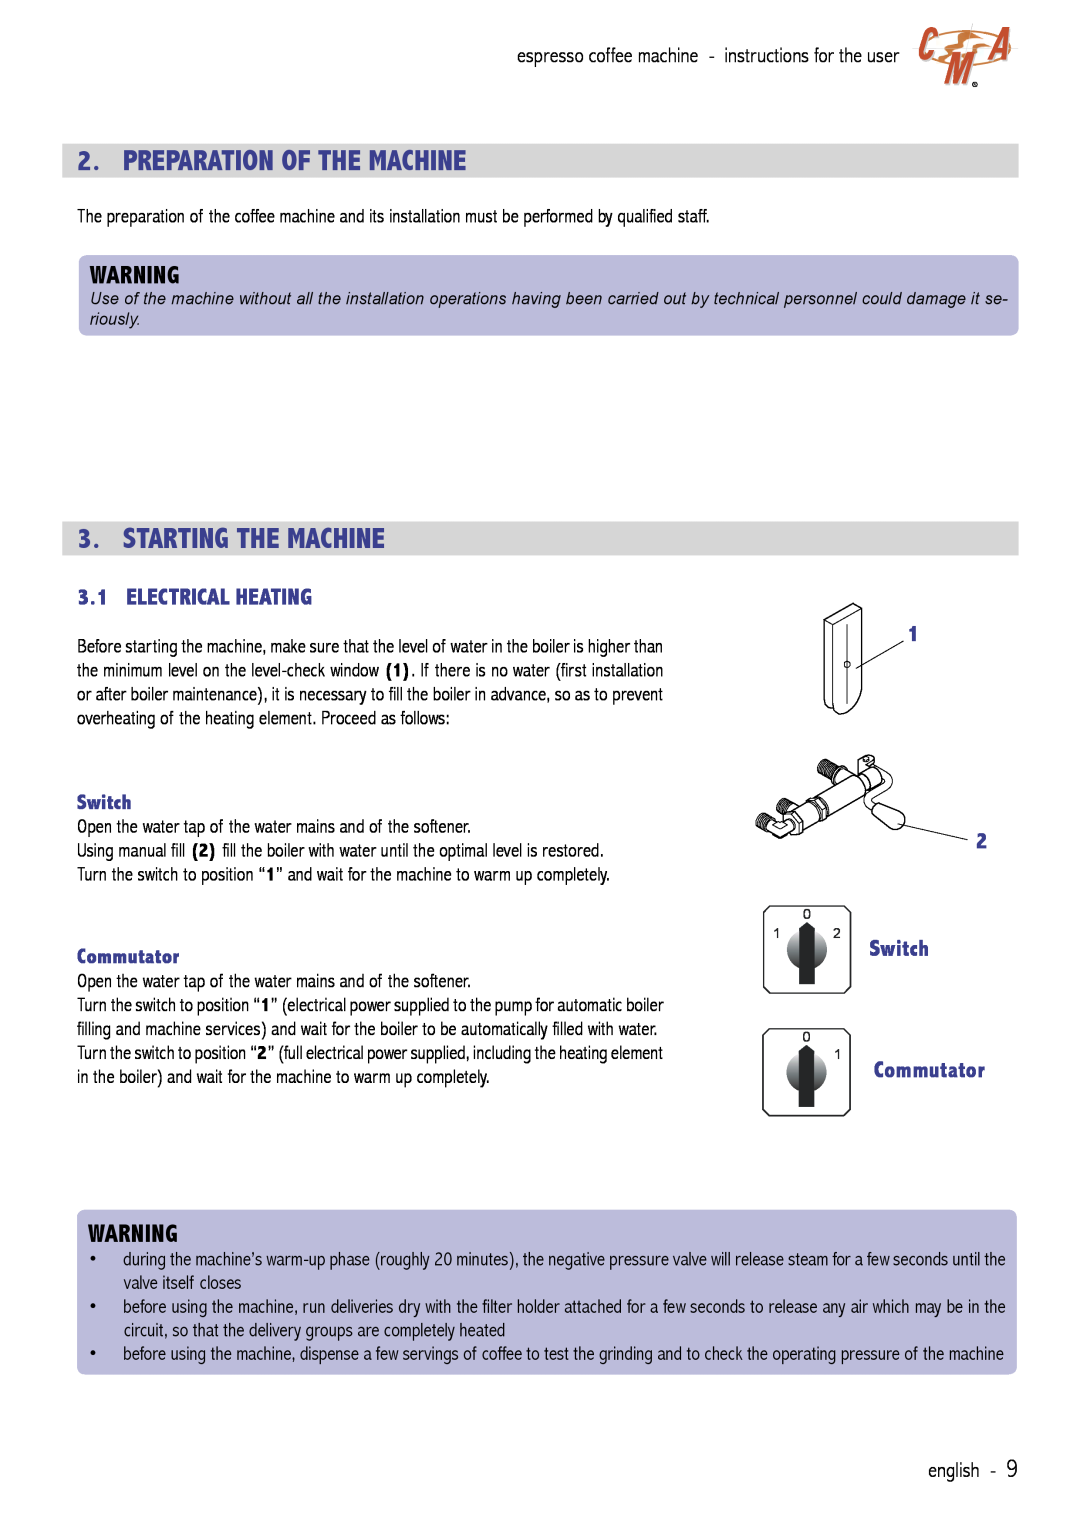 Cecilware VAE-J1 manual Preparation Of The Machine, Starting The Machine, Electrical Heating, Commutator, Switch, e nglish 